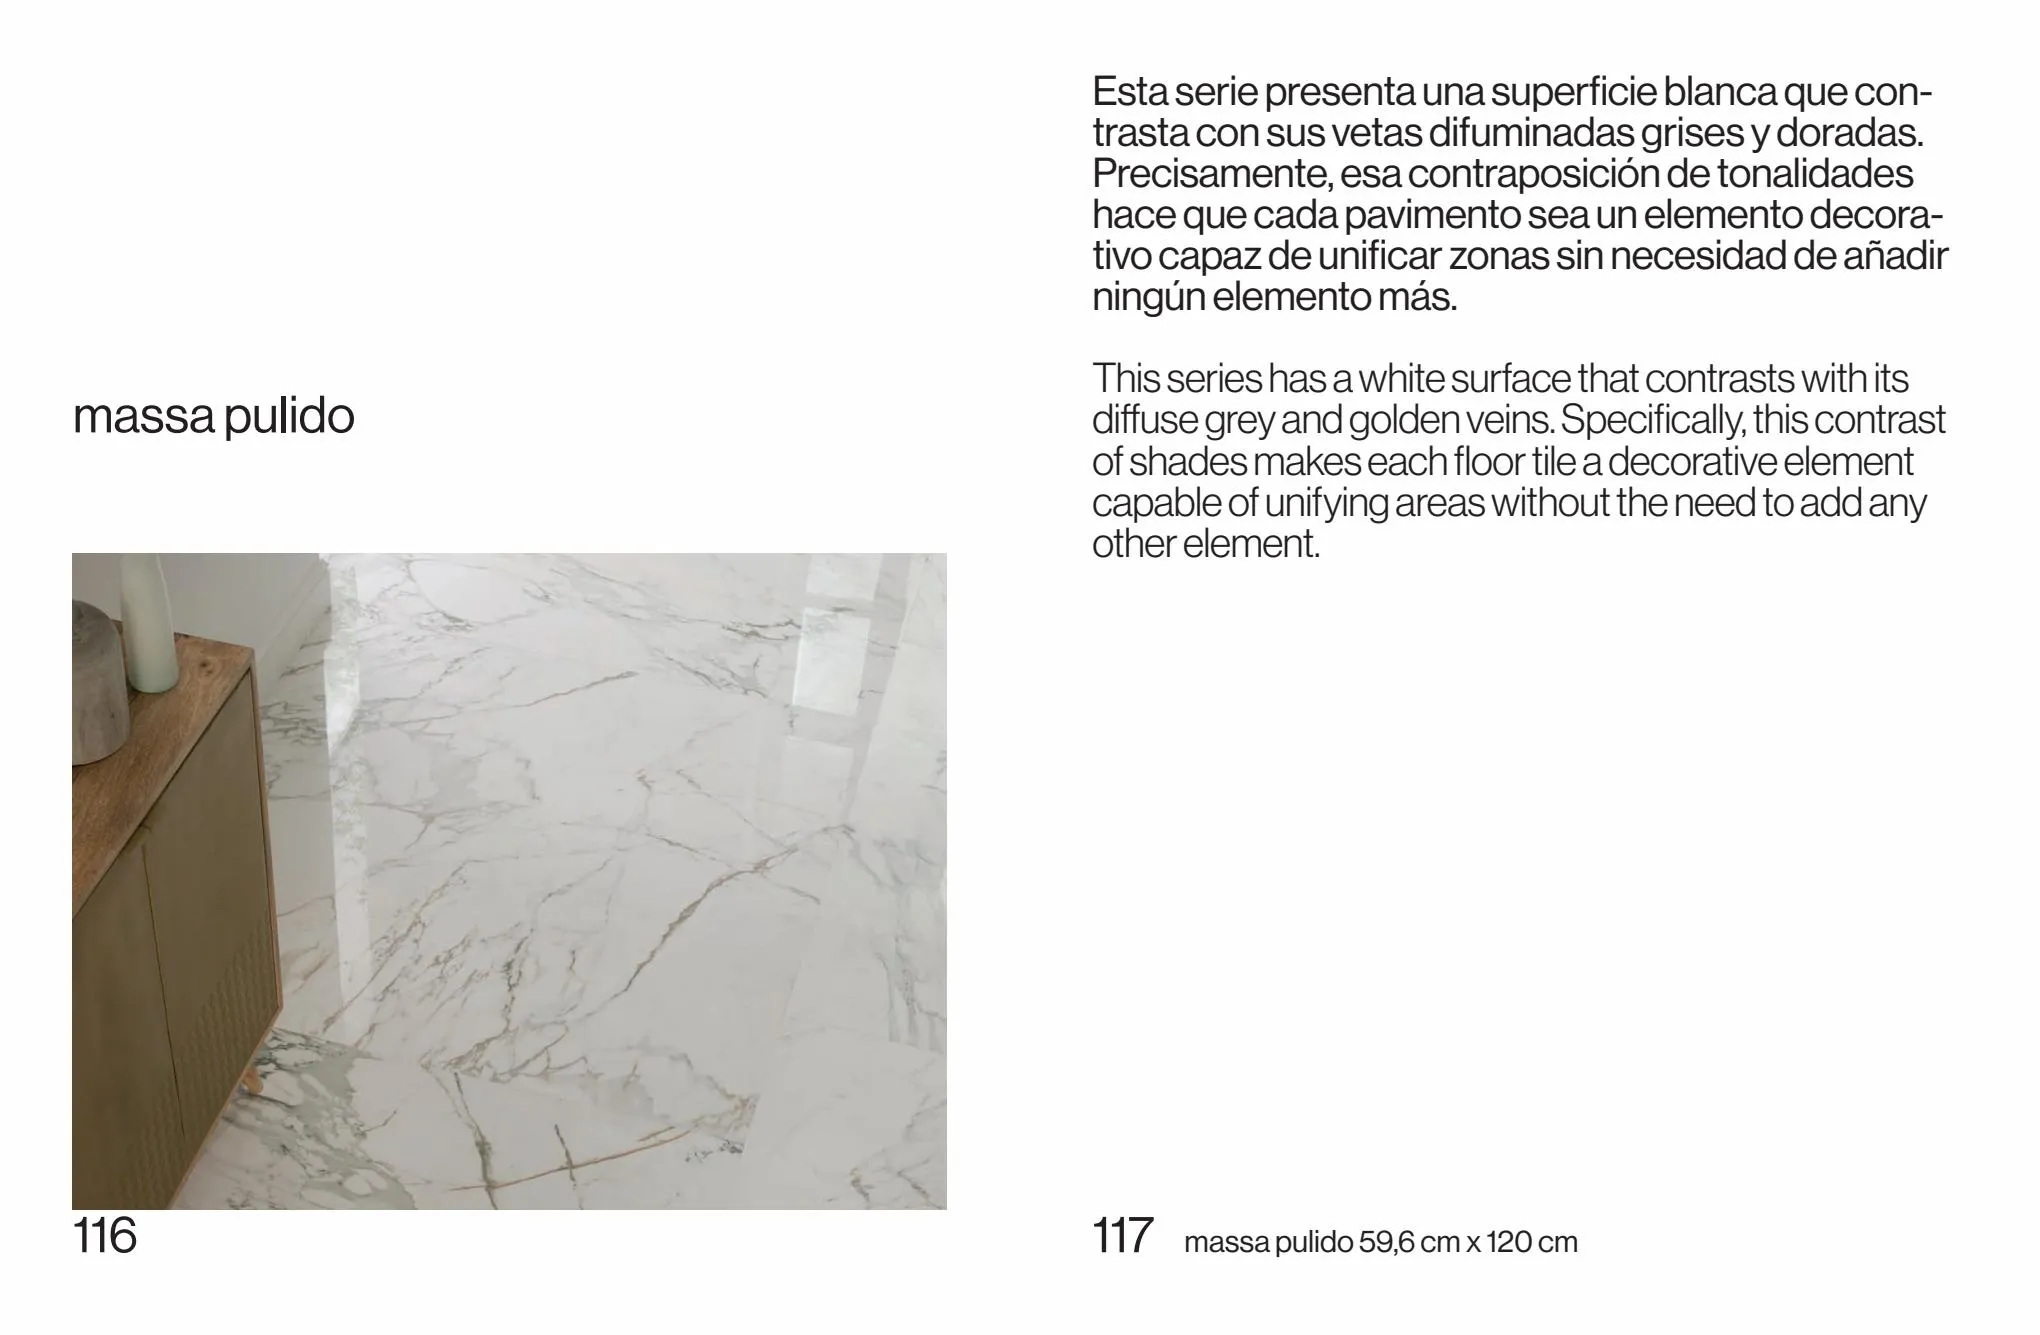 Catalogue Catalogue Porcelanosa, page 00061